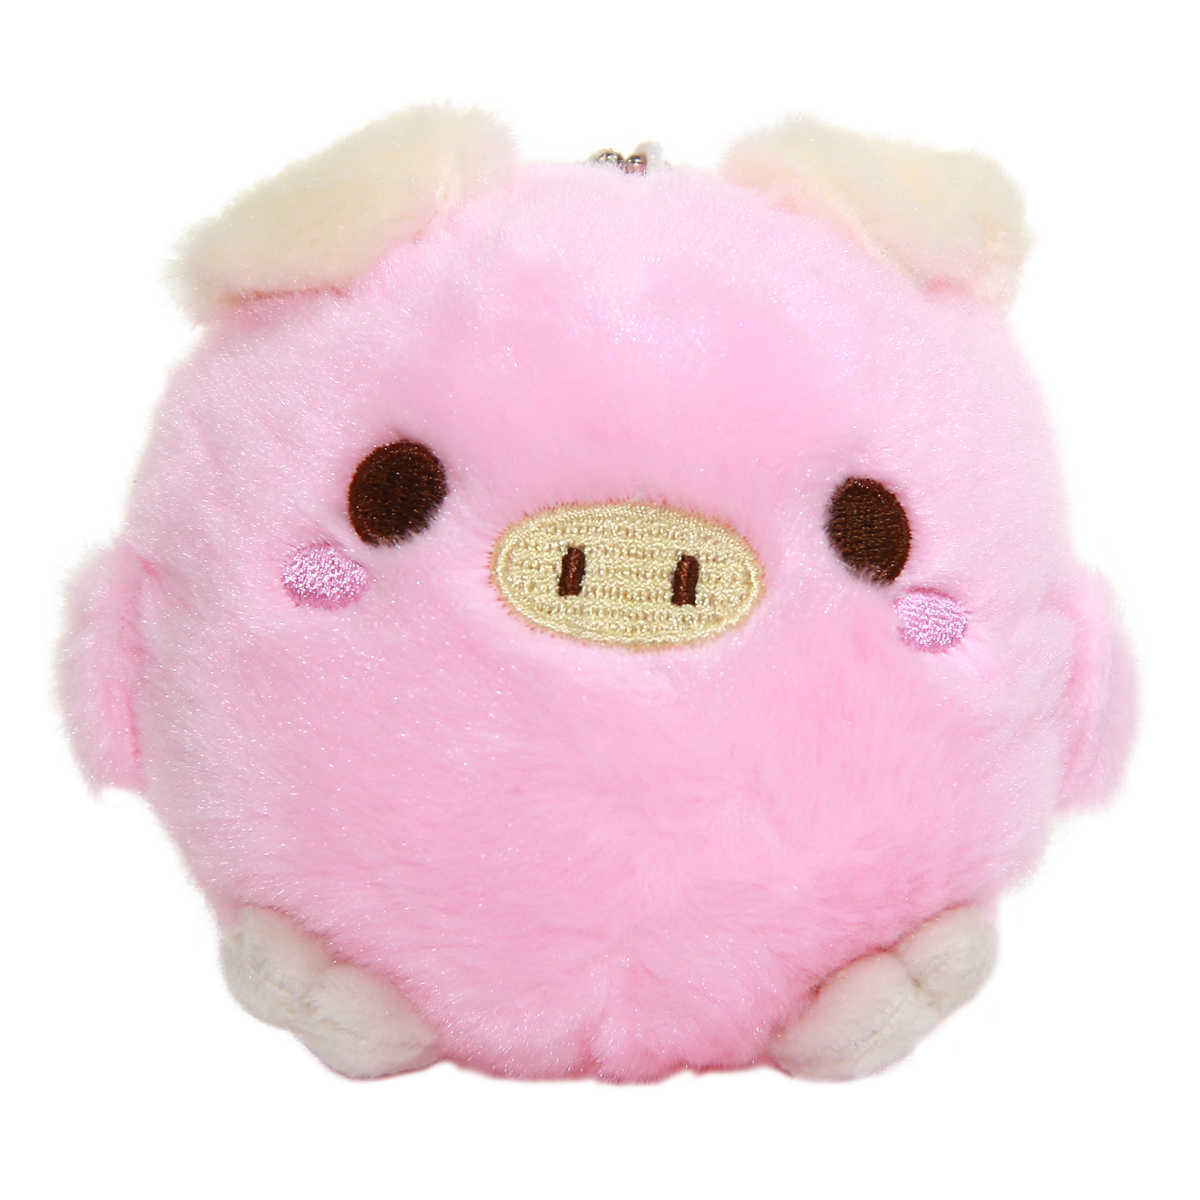 Pig Plush Doll Kawaii Stuffed Animal Soft Fuzzy Plushie Pink Japanese 4 Inches 